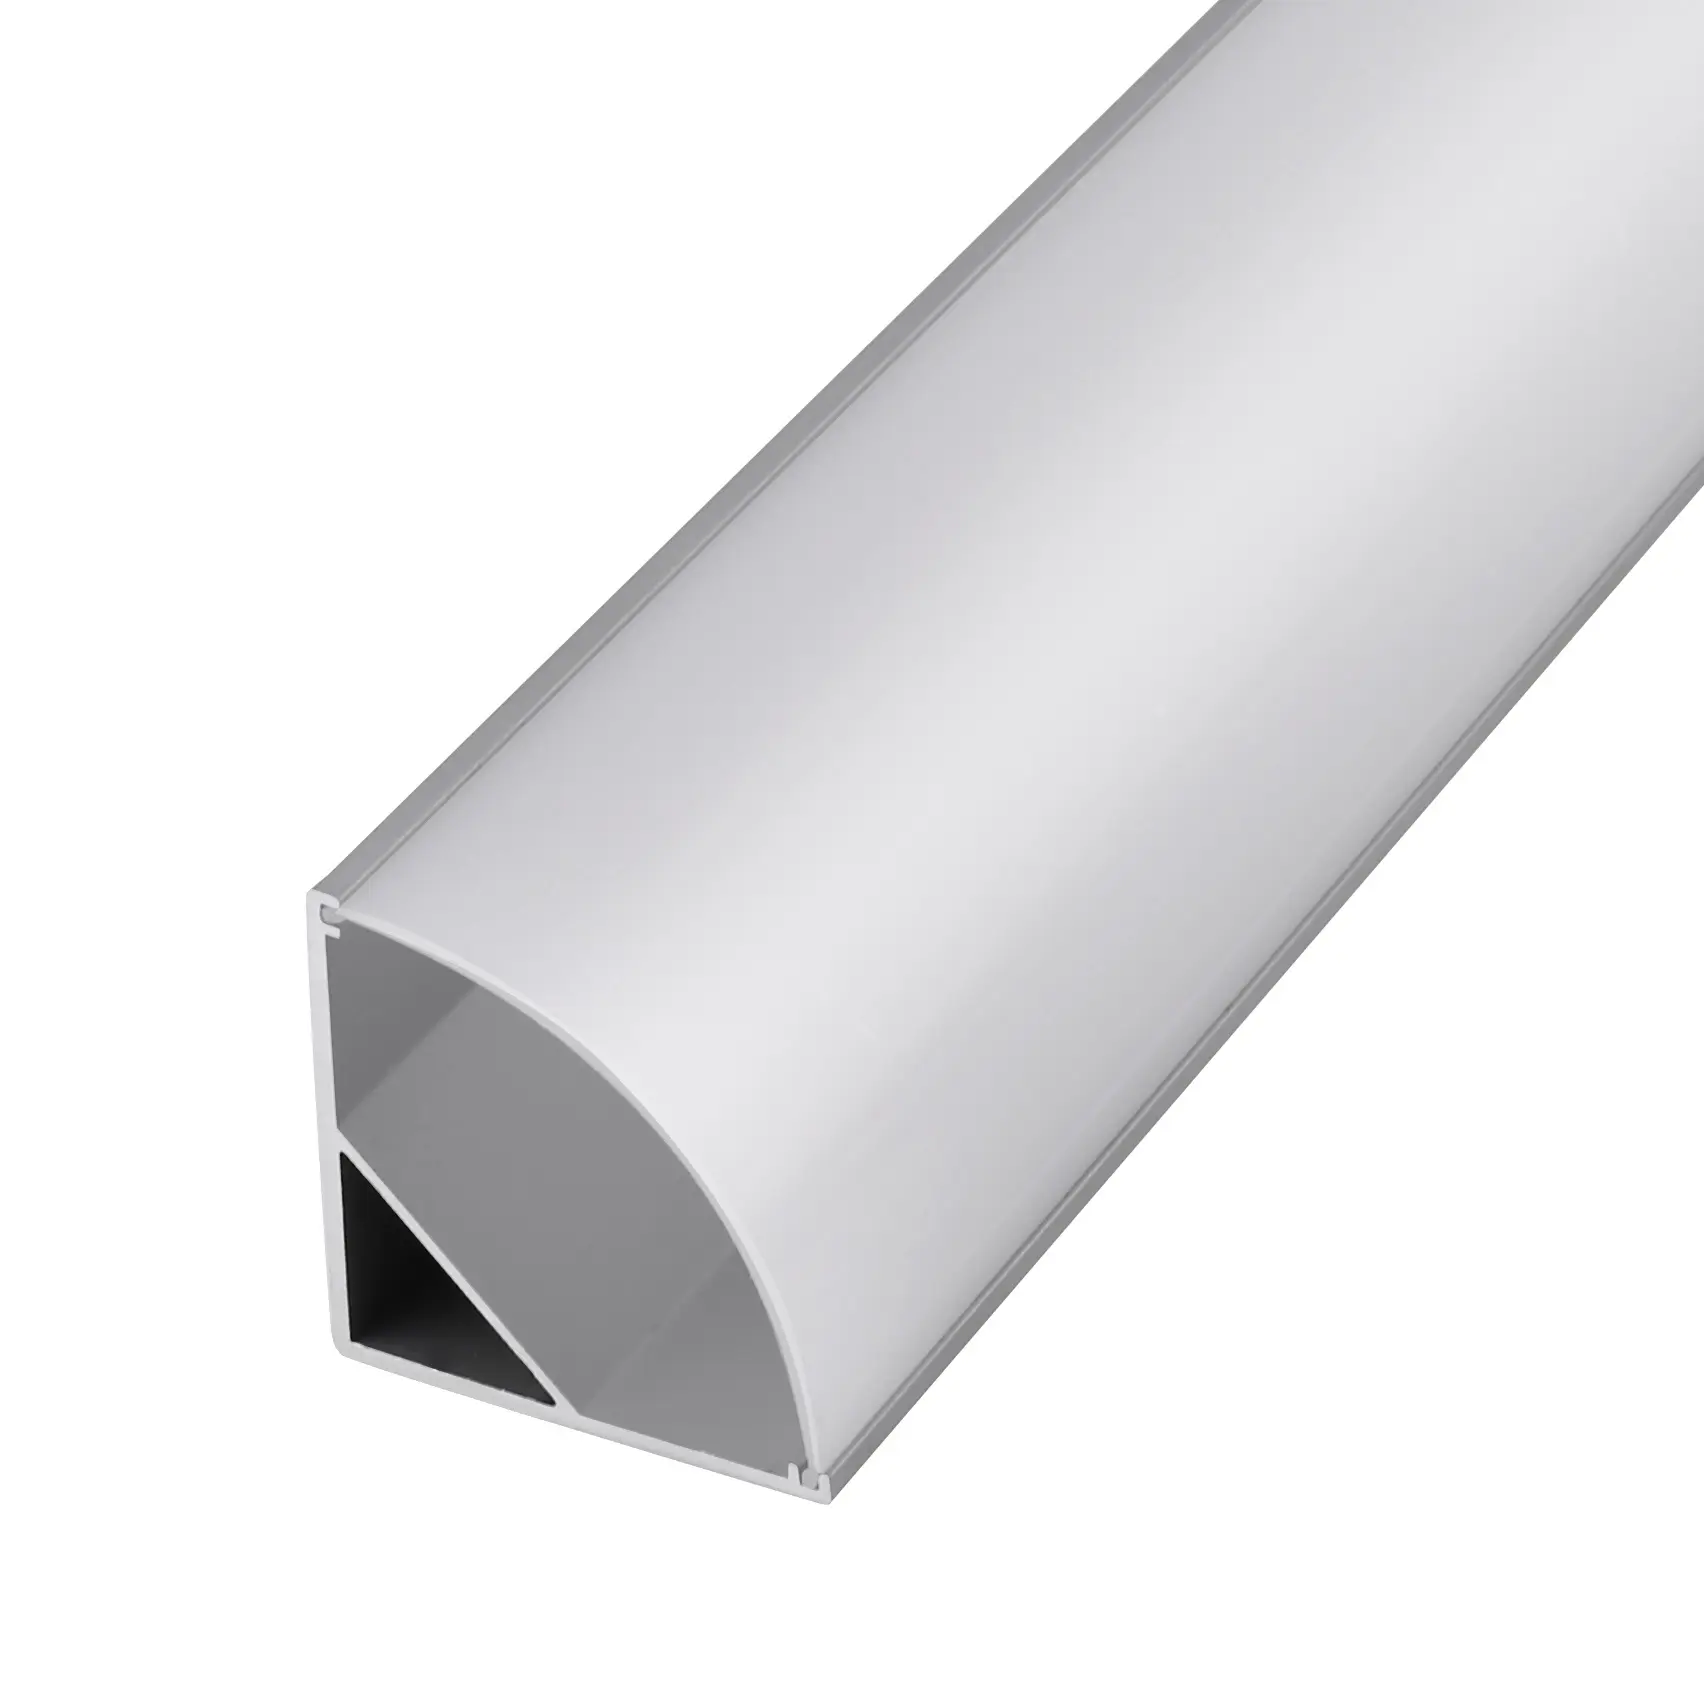 Customized Led Strip Corner Flexible Aluminum Profiles Angle Corner Mounted Aluminum Housing Linear Profile Led Channel